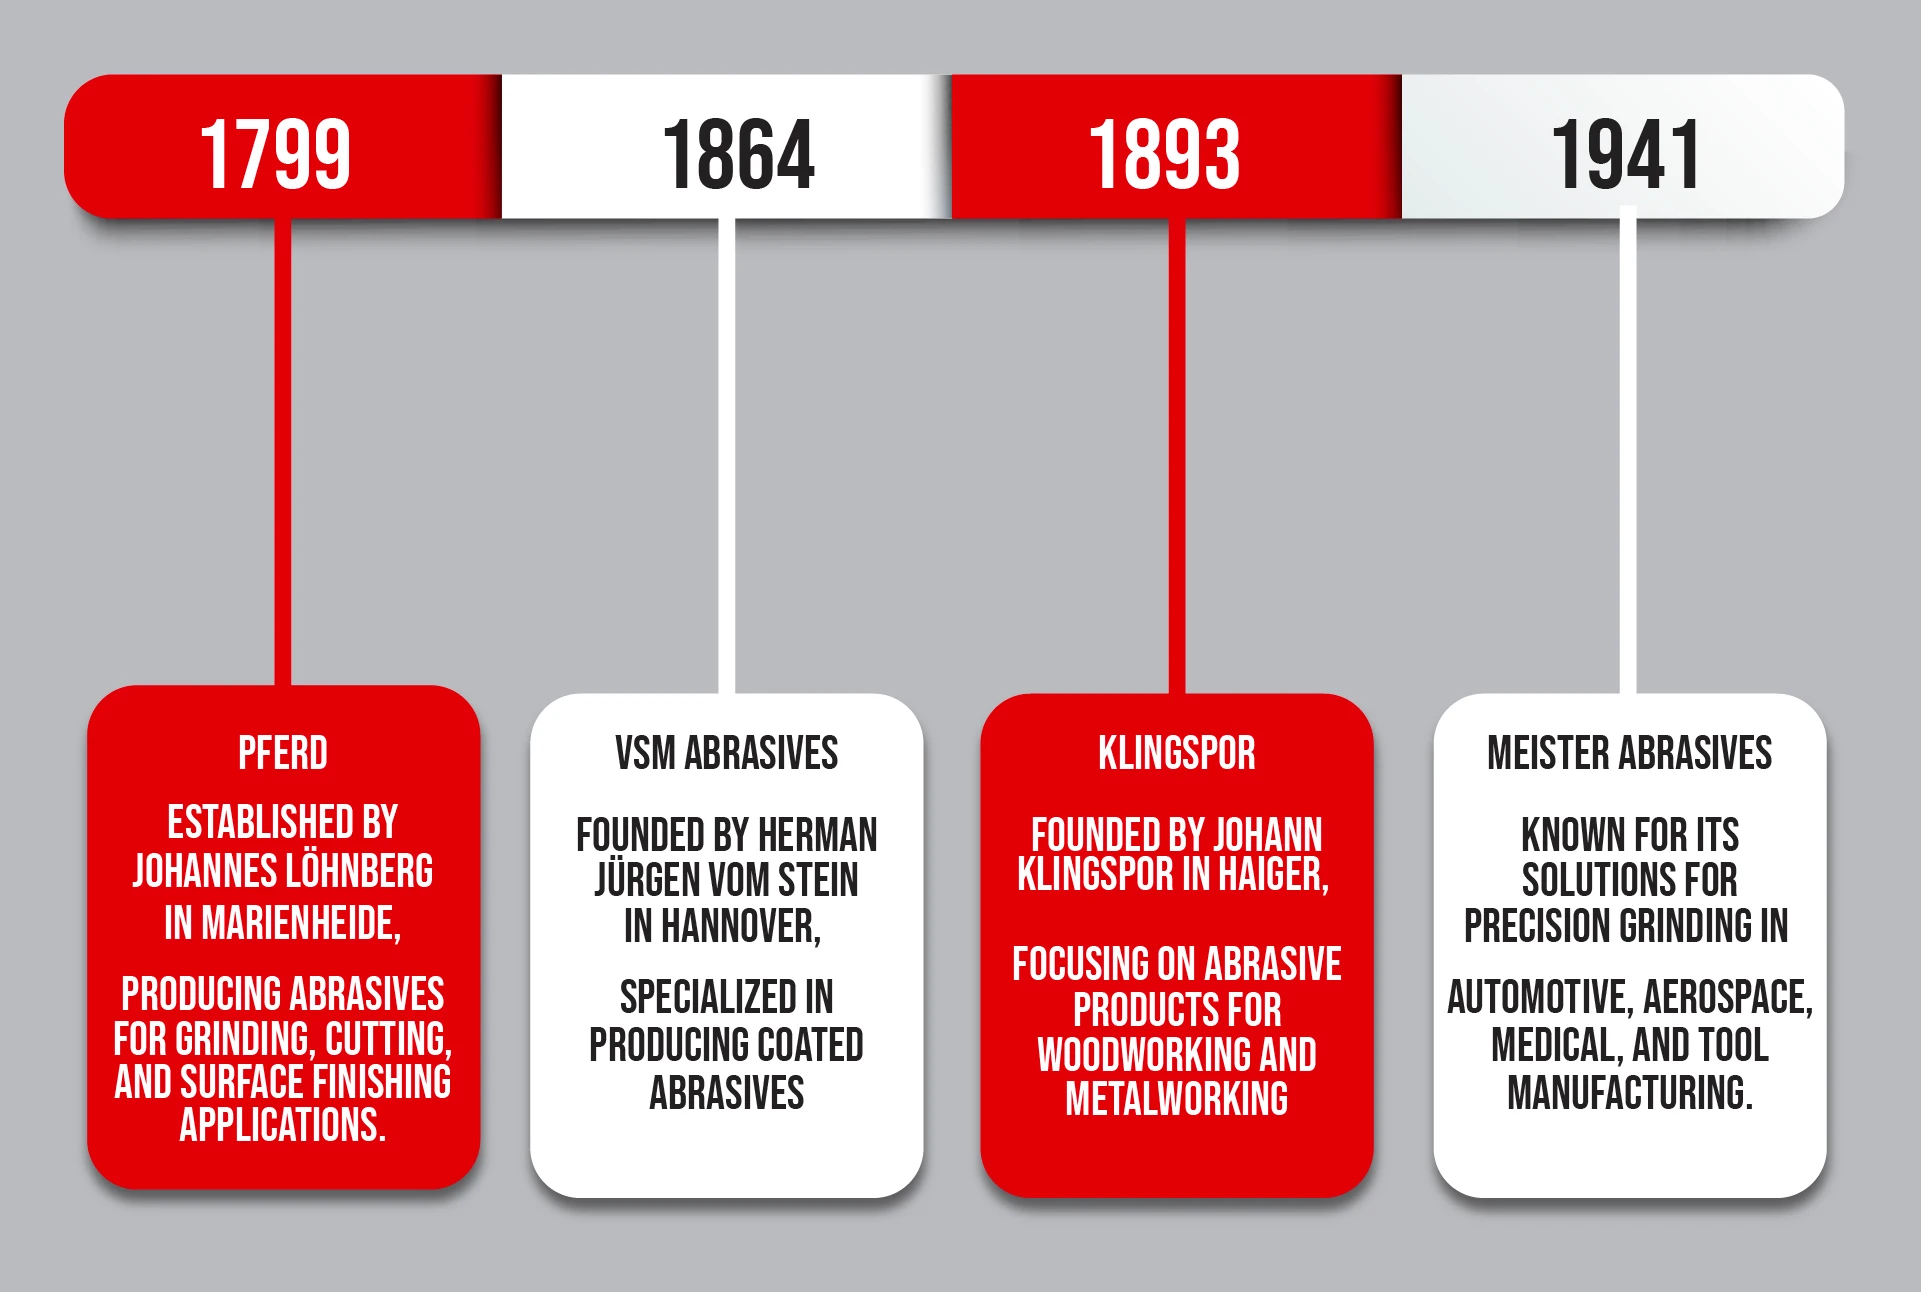 A timeline of German abrasive manufacturers’ history